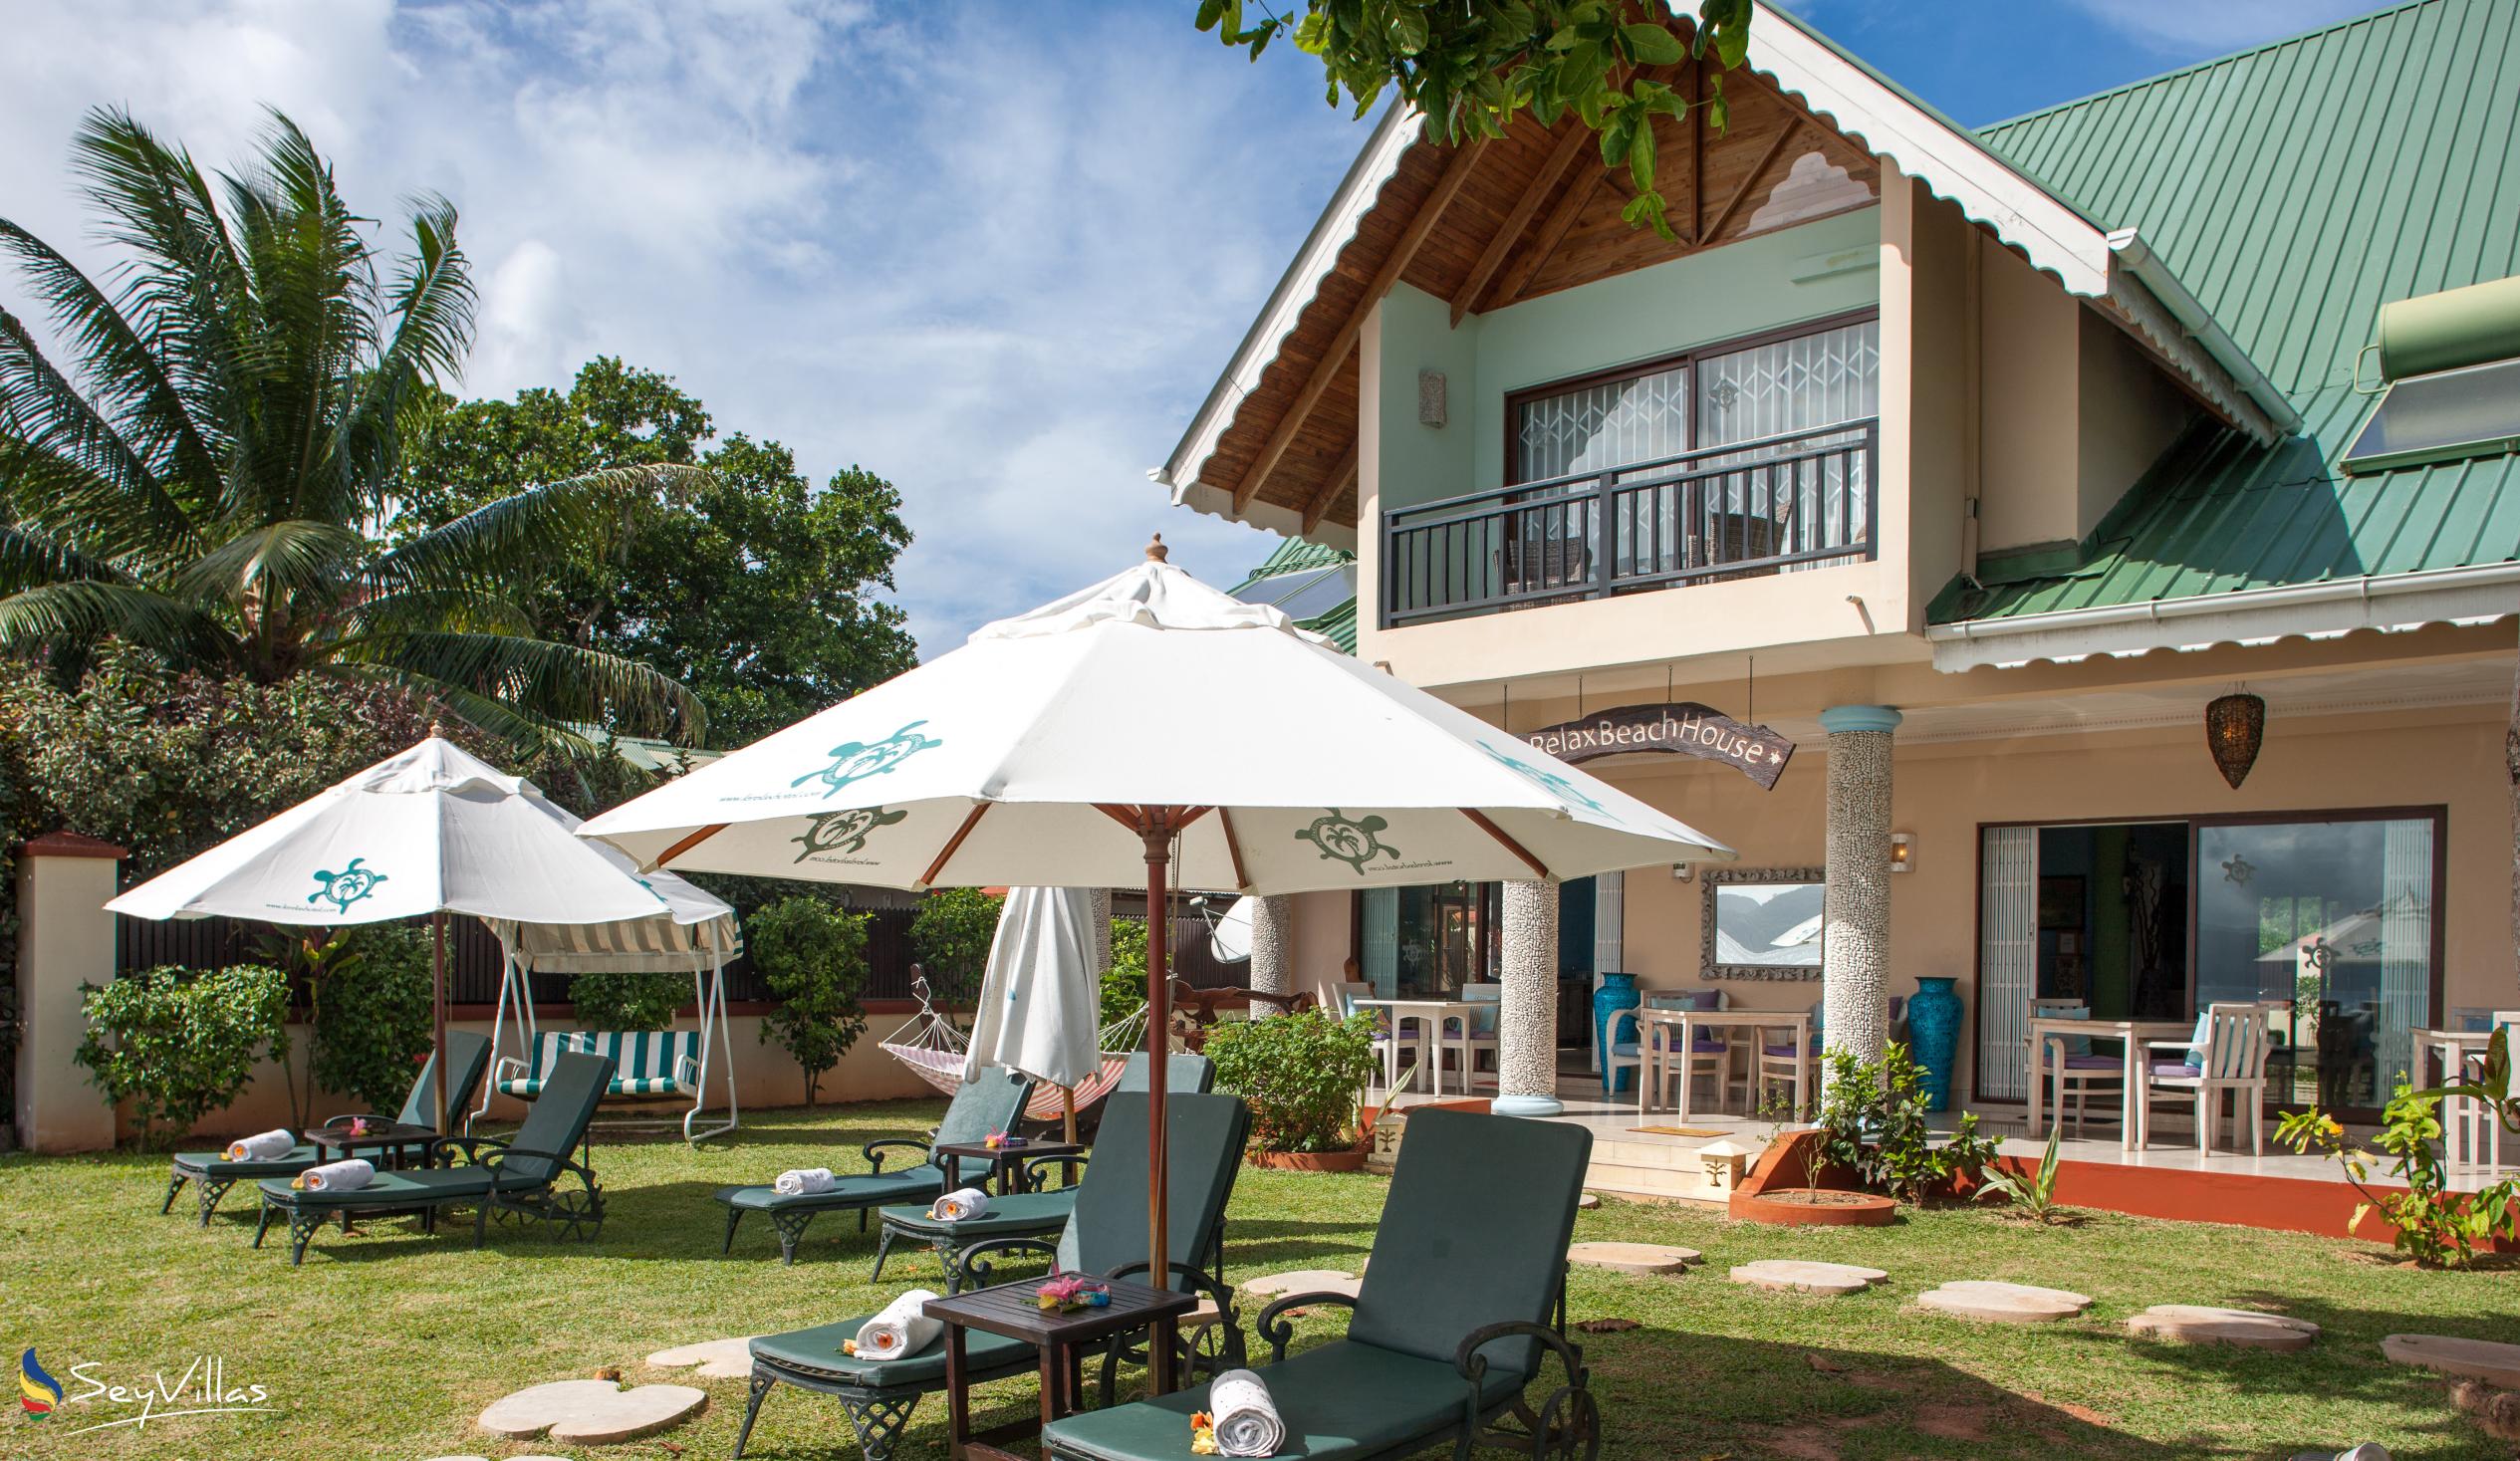 Photo 2: Le Relax Beach House - Outdoor area - La Digue (Seychelles)